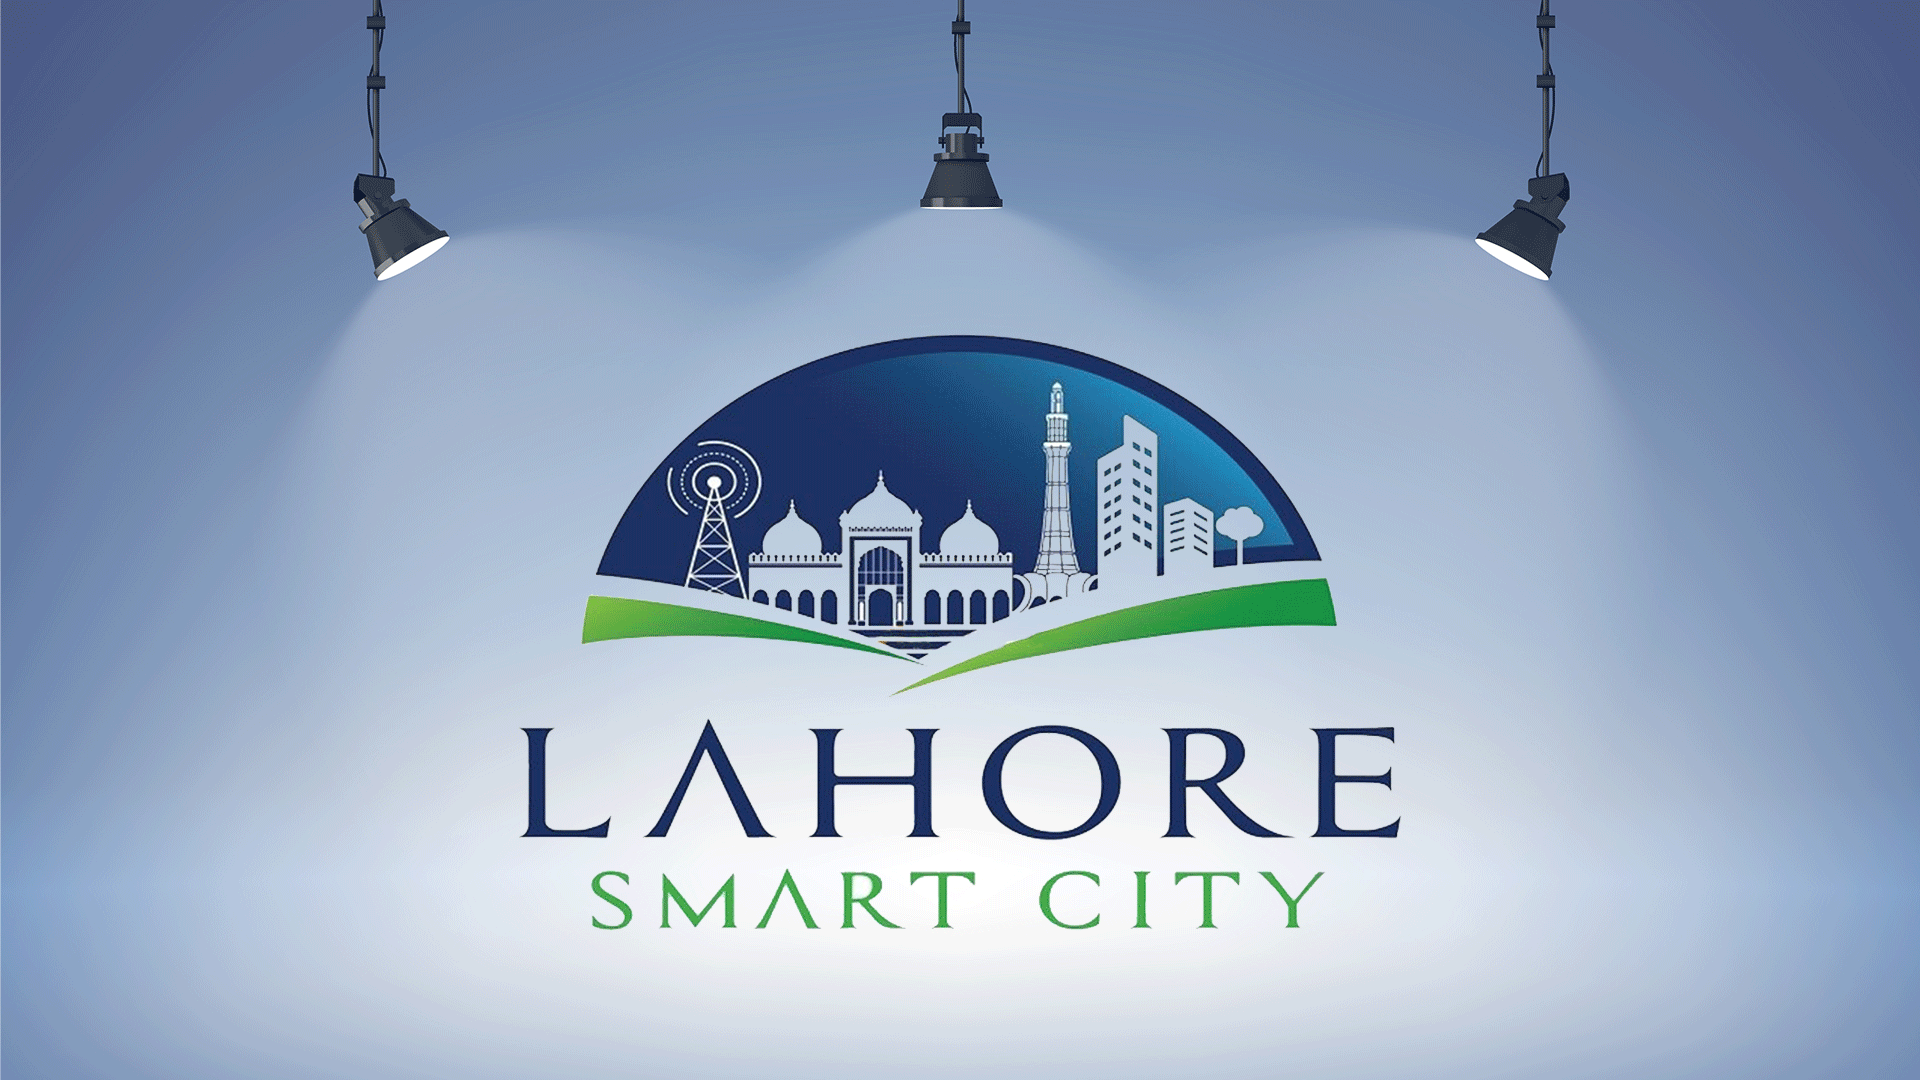 lahore-smart-city-feature-image-1